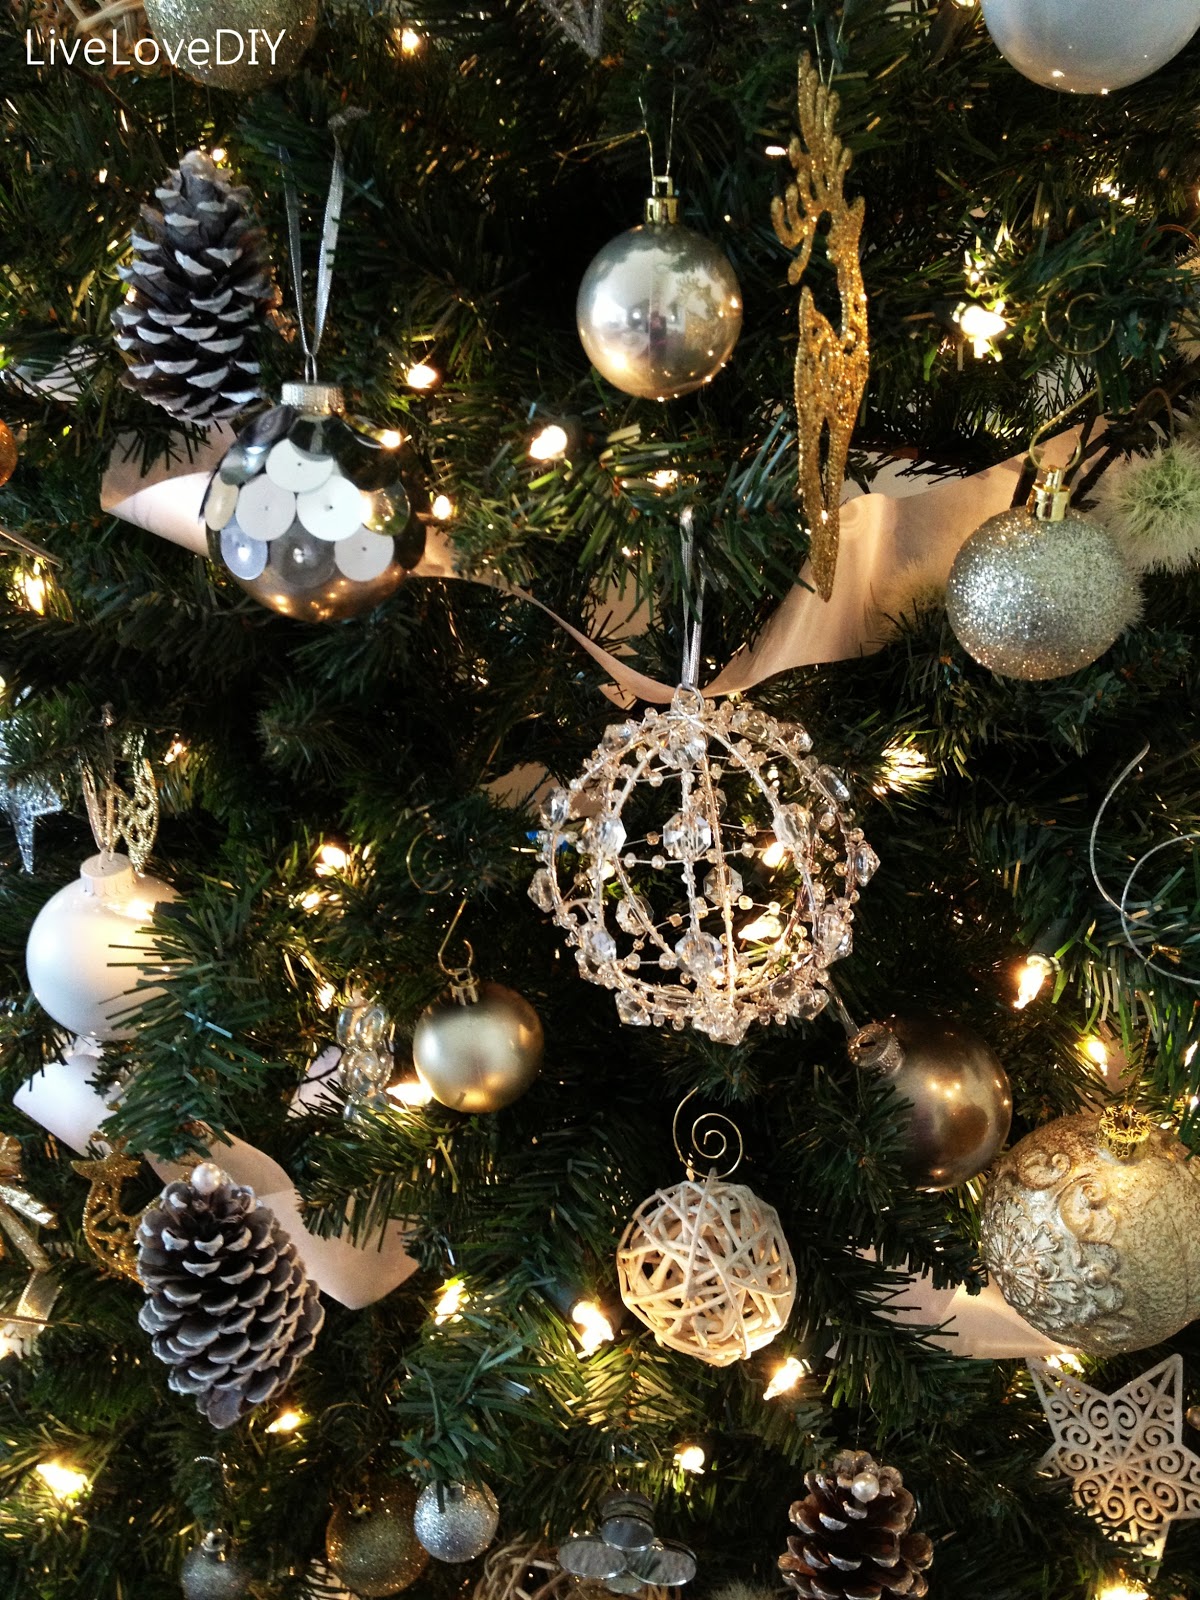 DIY Christmas Tree Ornament